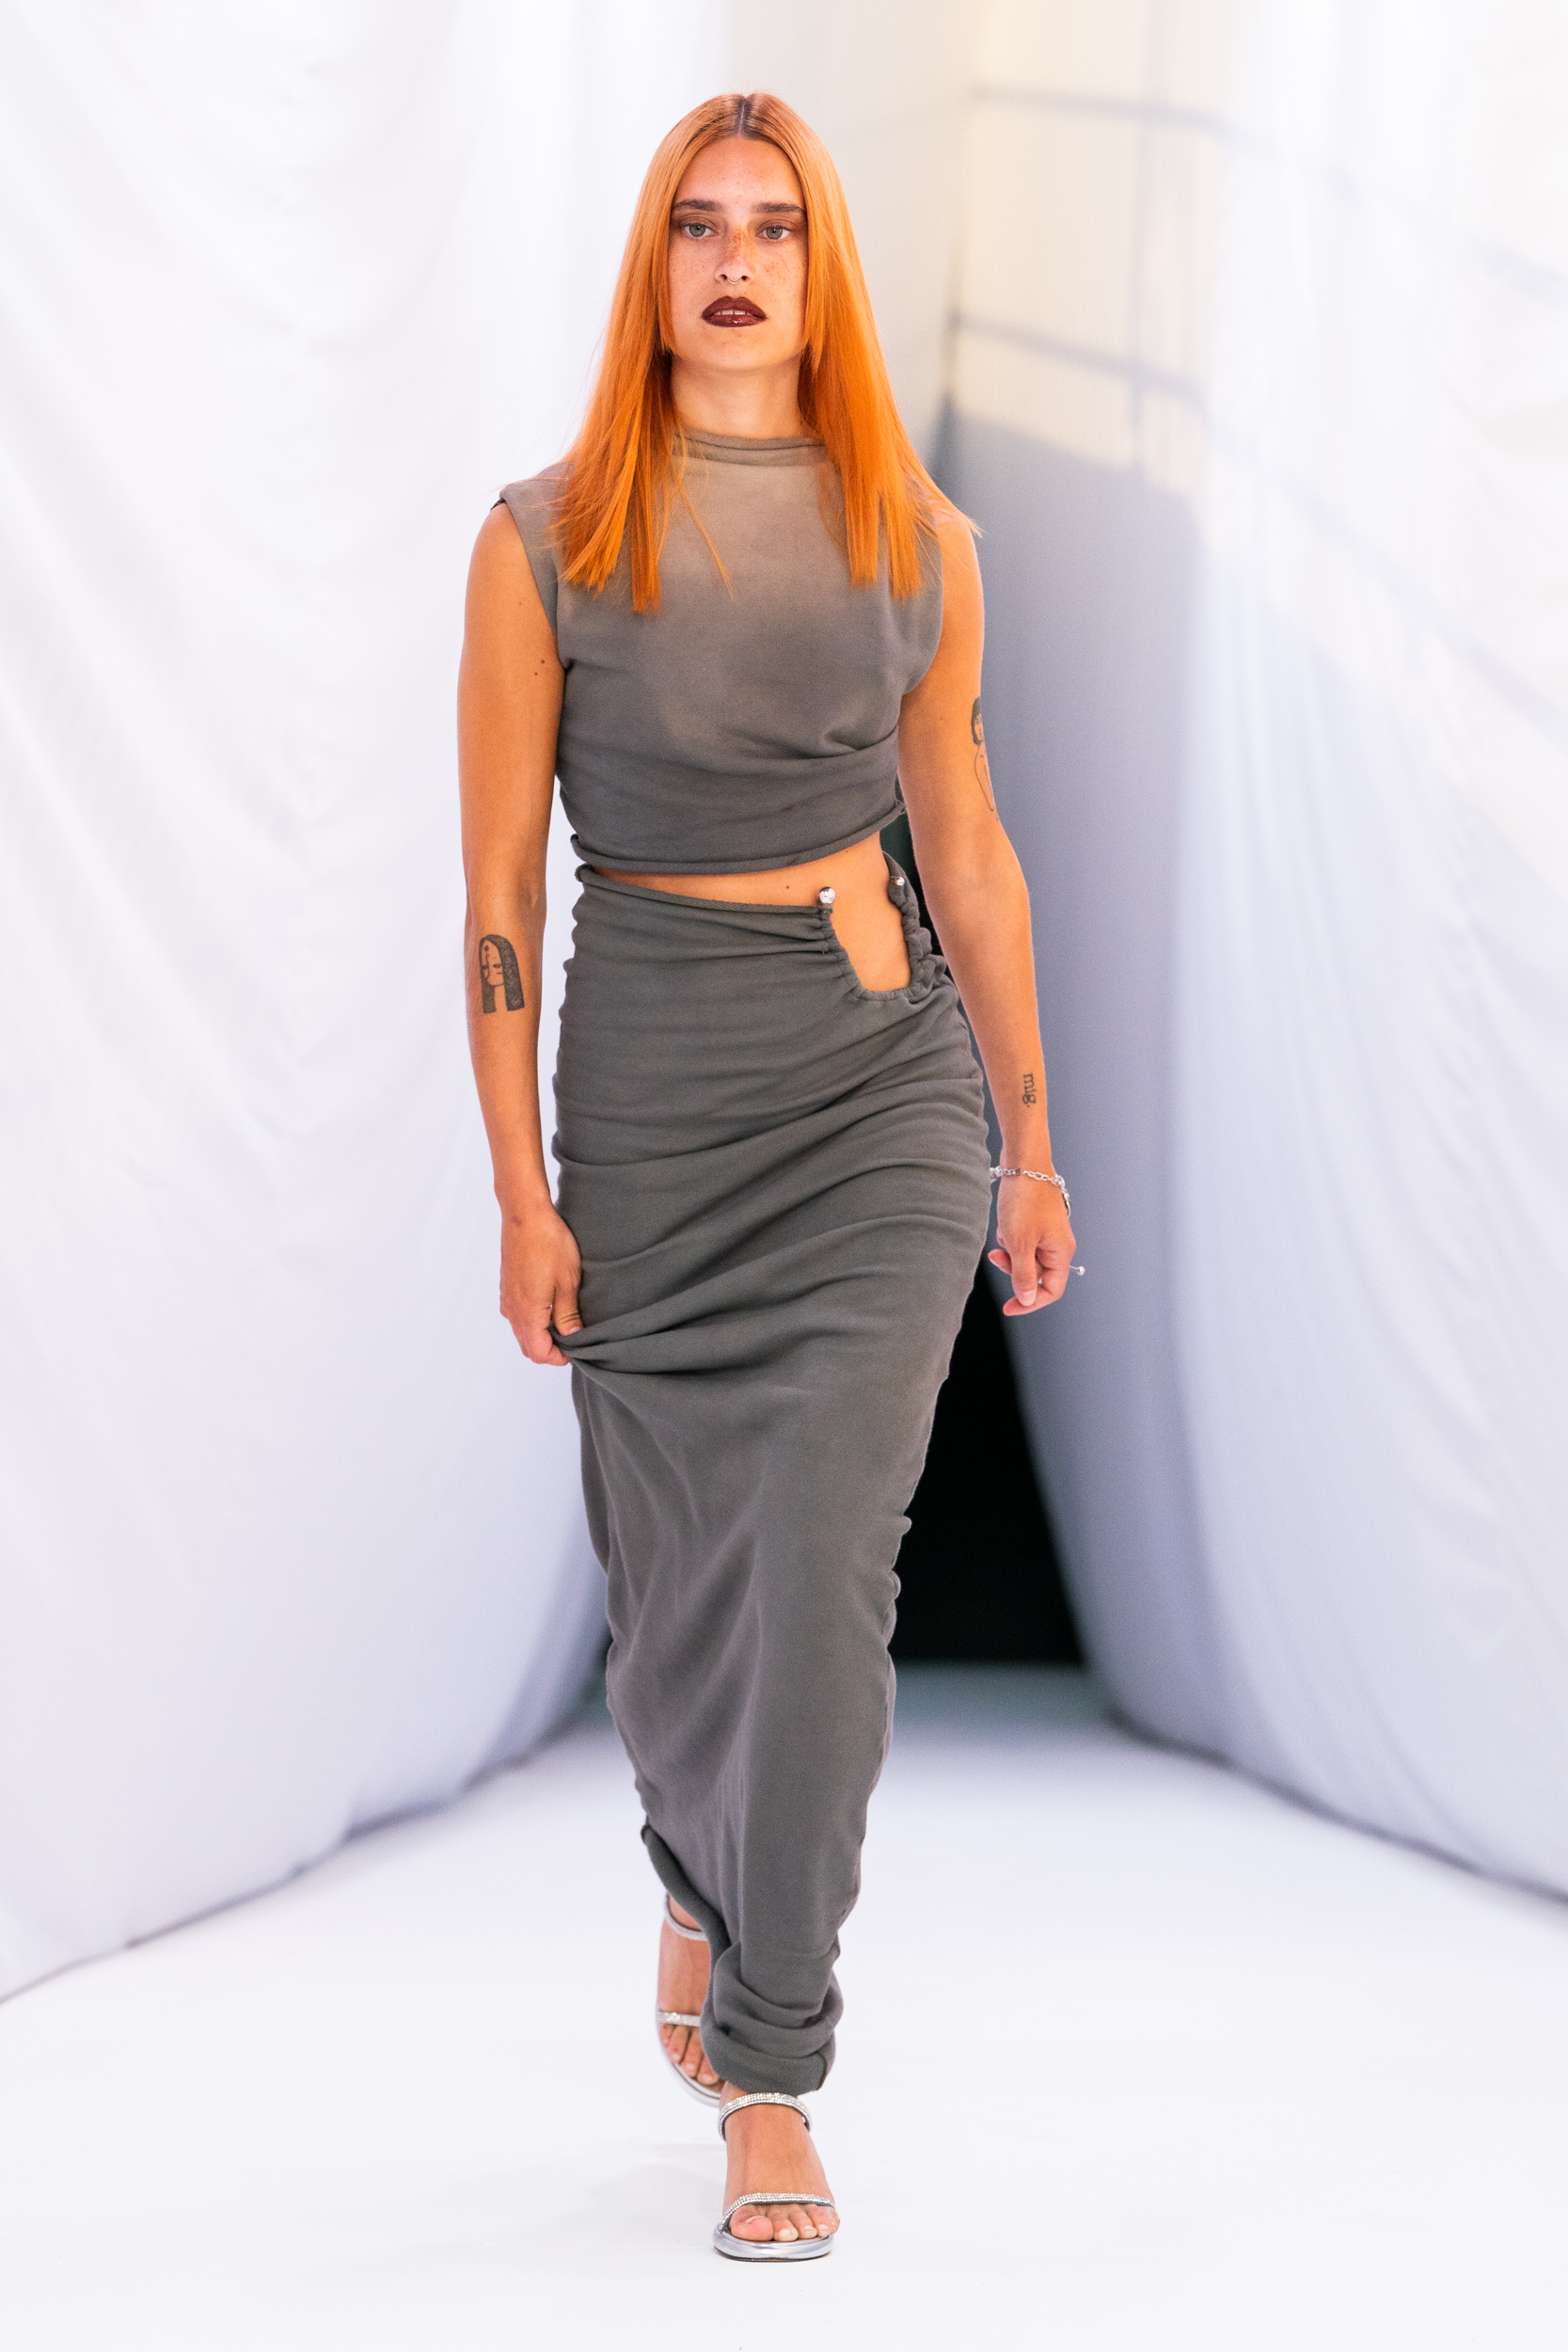 Jade Cropper Spring 2023 Fashion Show 